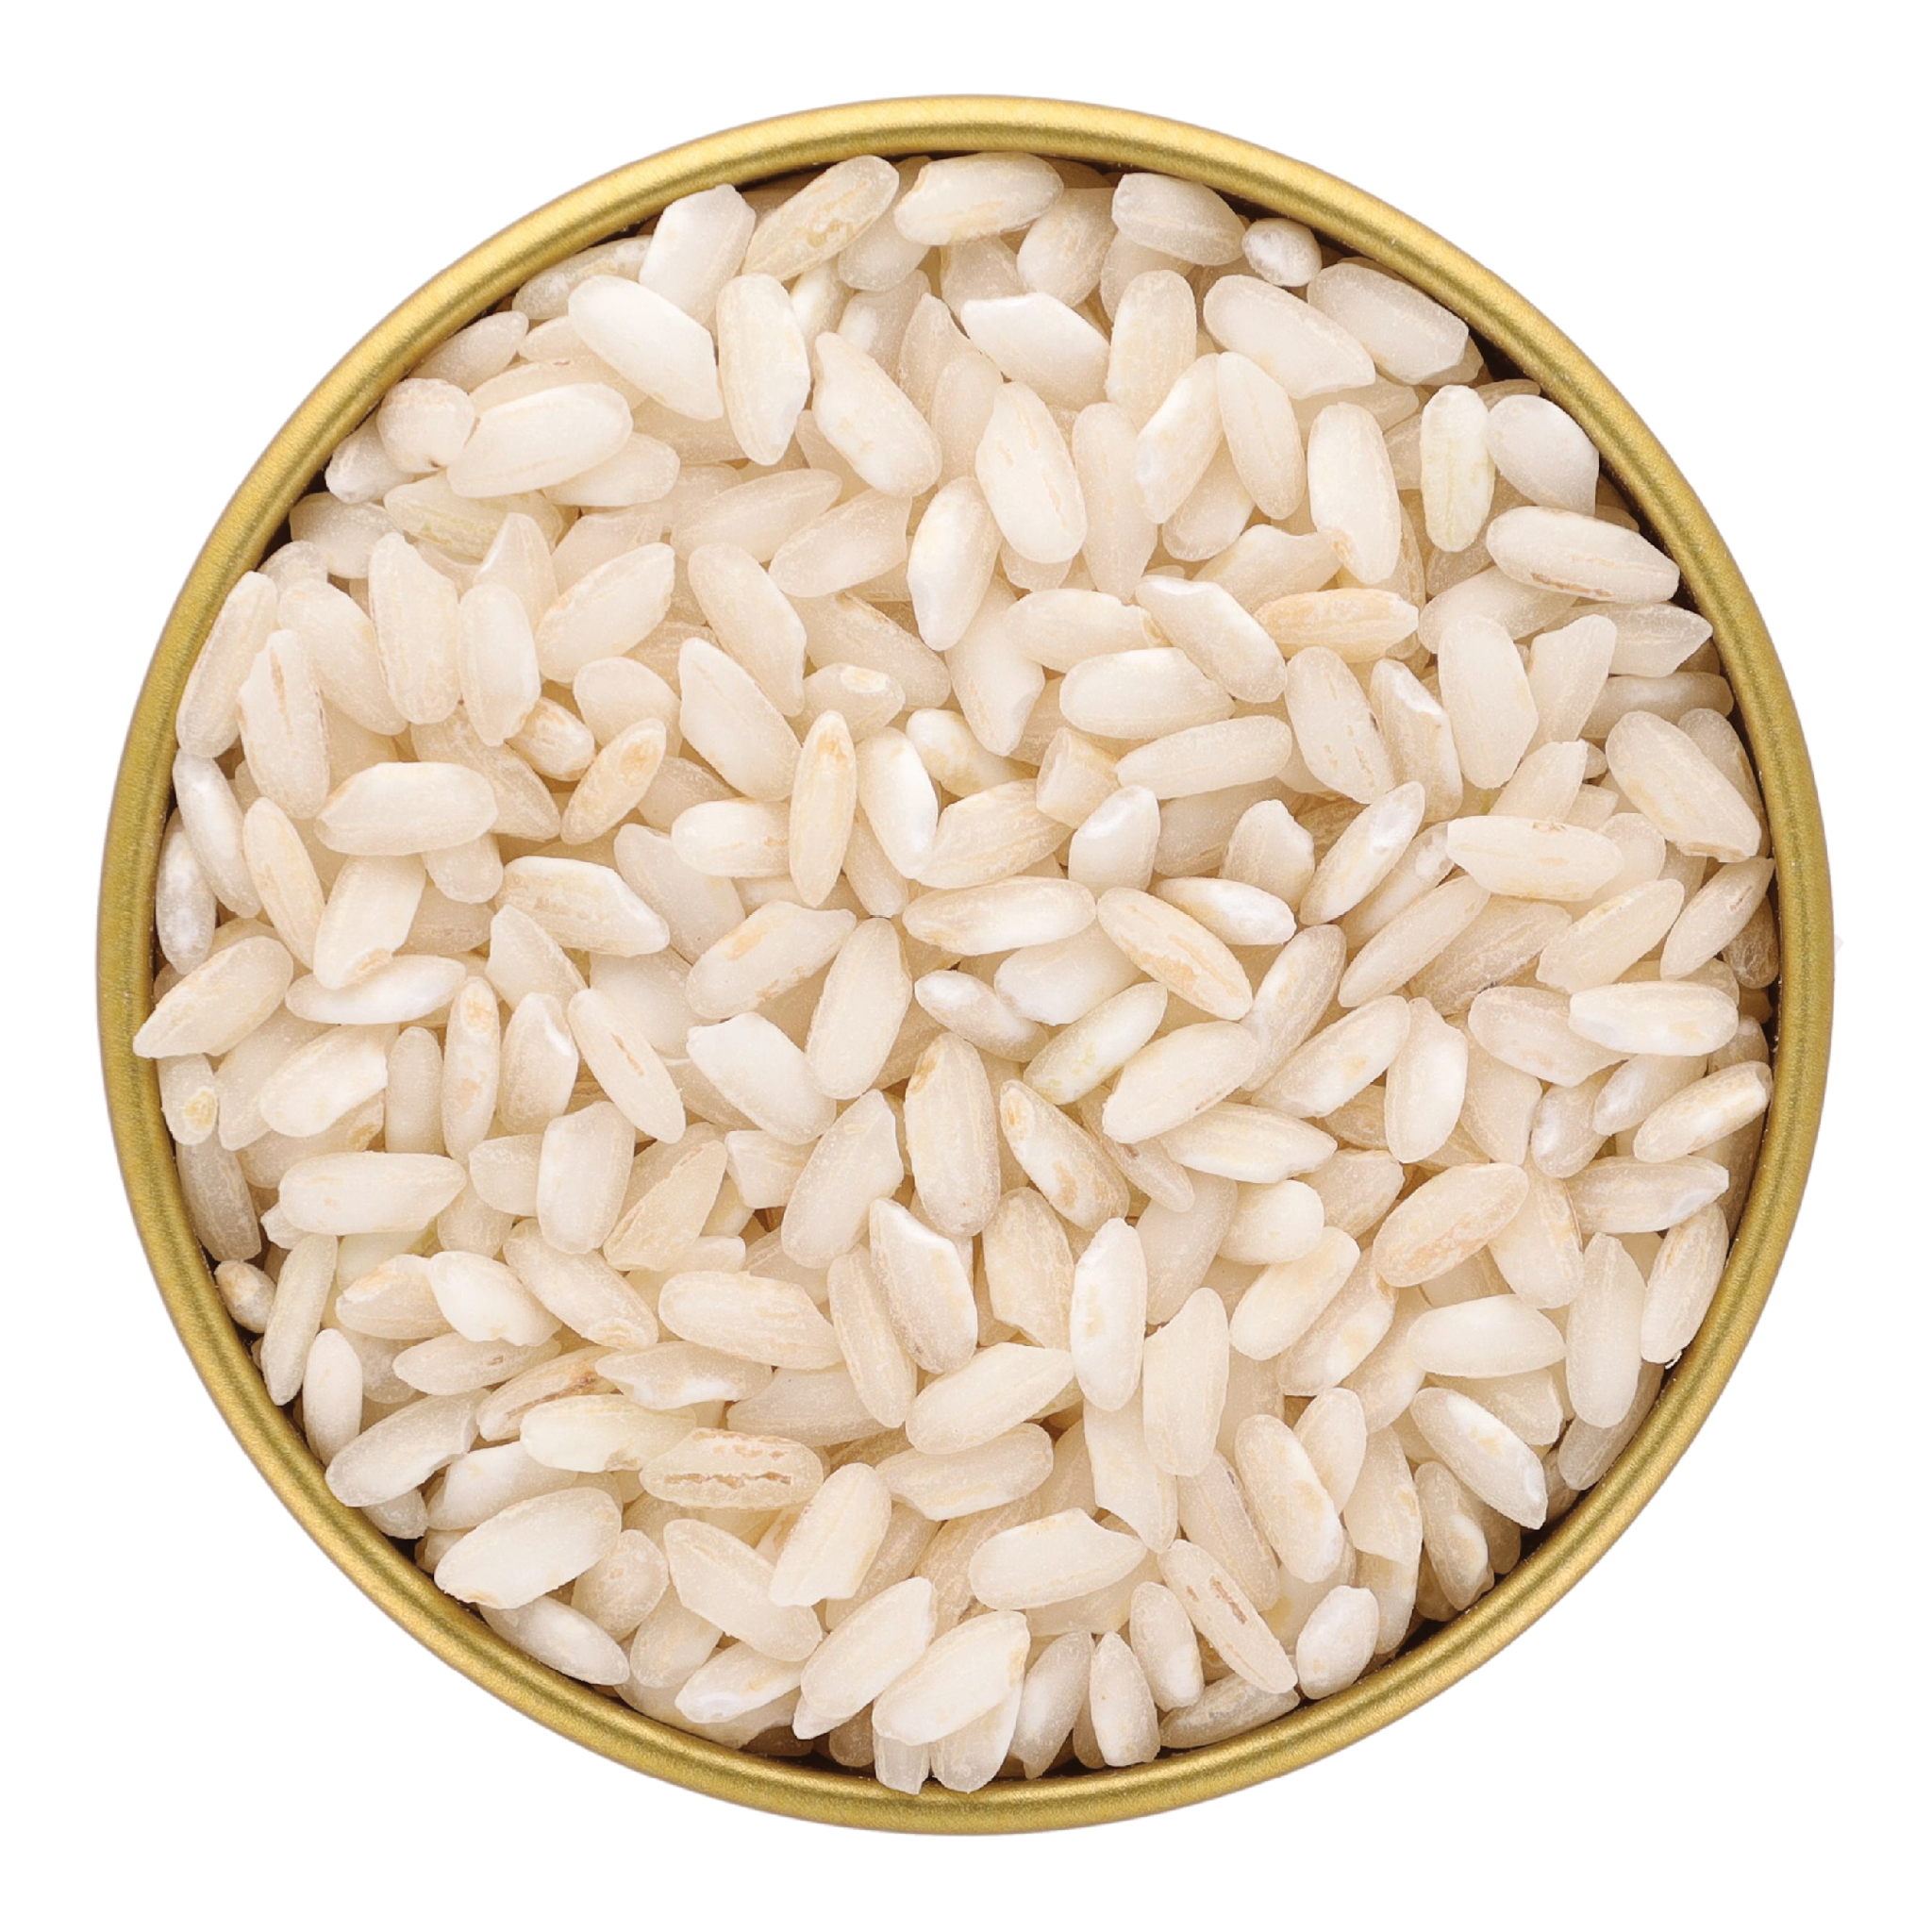 Carnaroli Rice 2.2 lbs